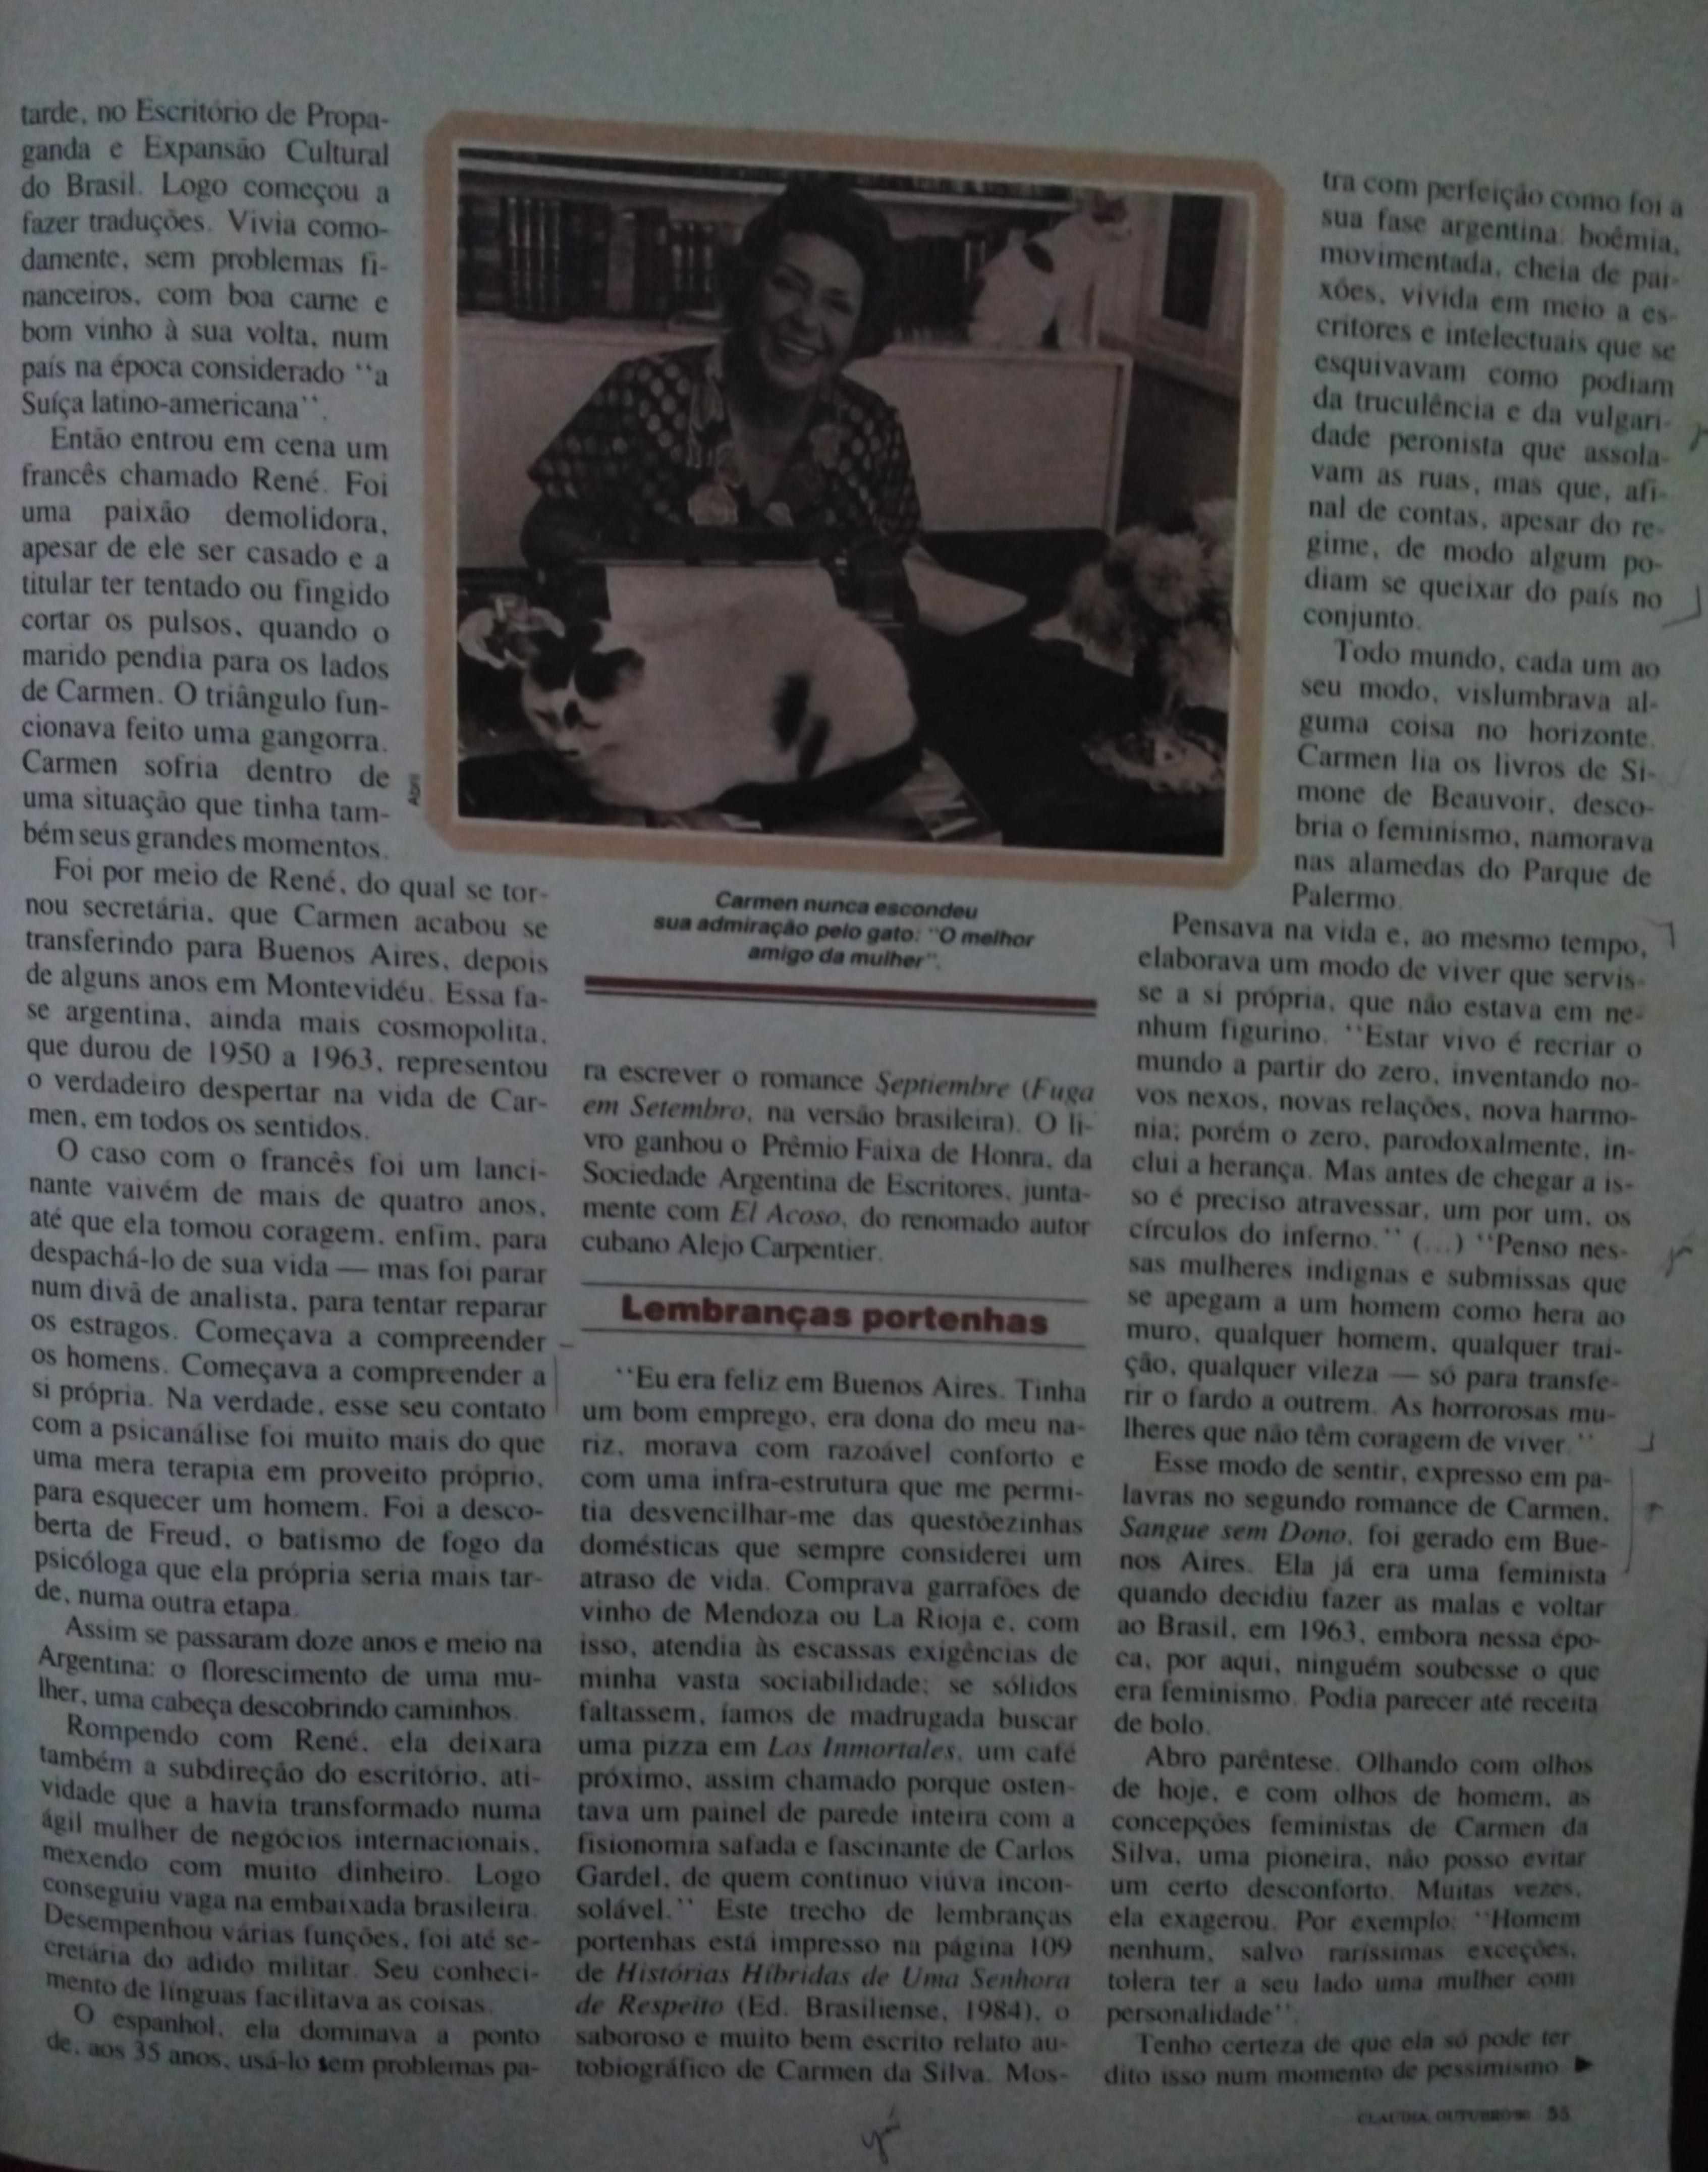 Revista Claudia, nº 349, outubro de 1990. Pg. 55.